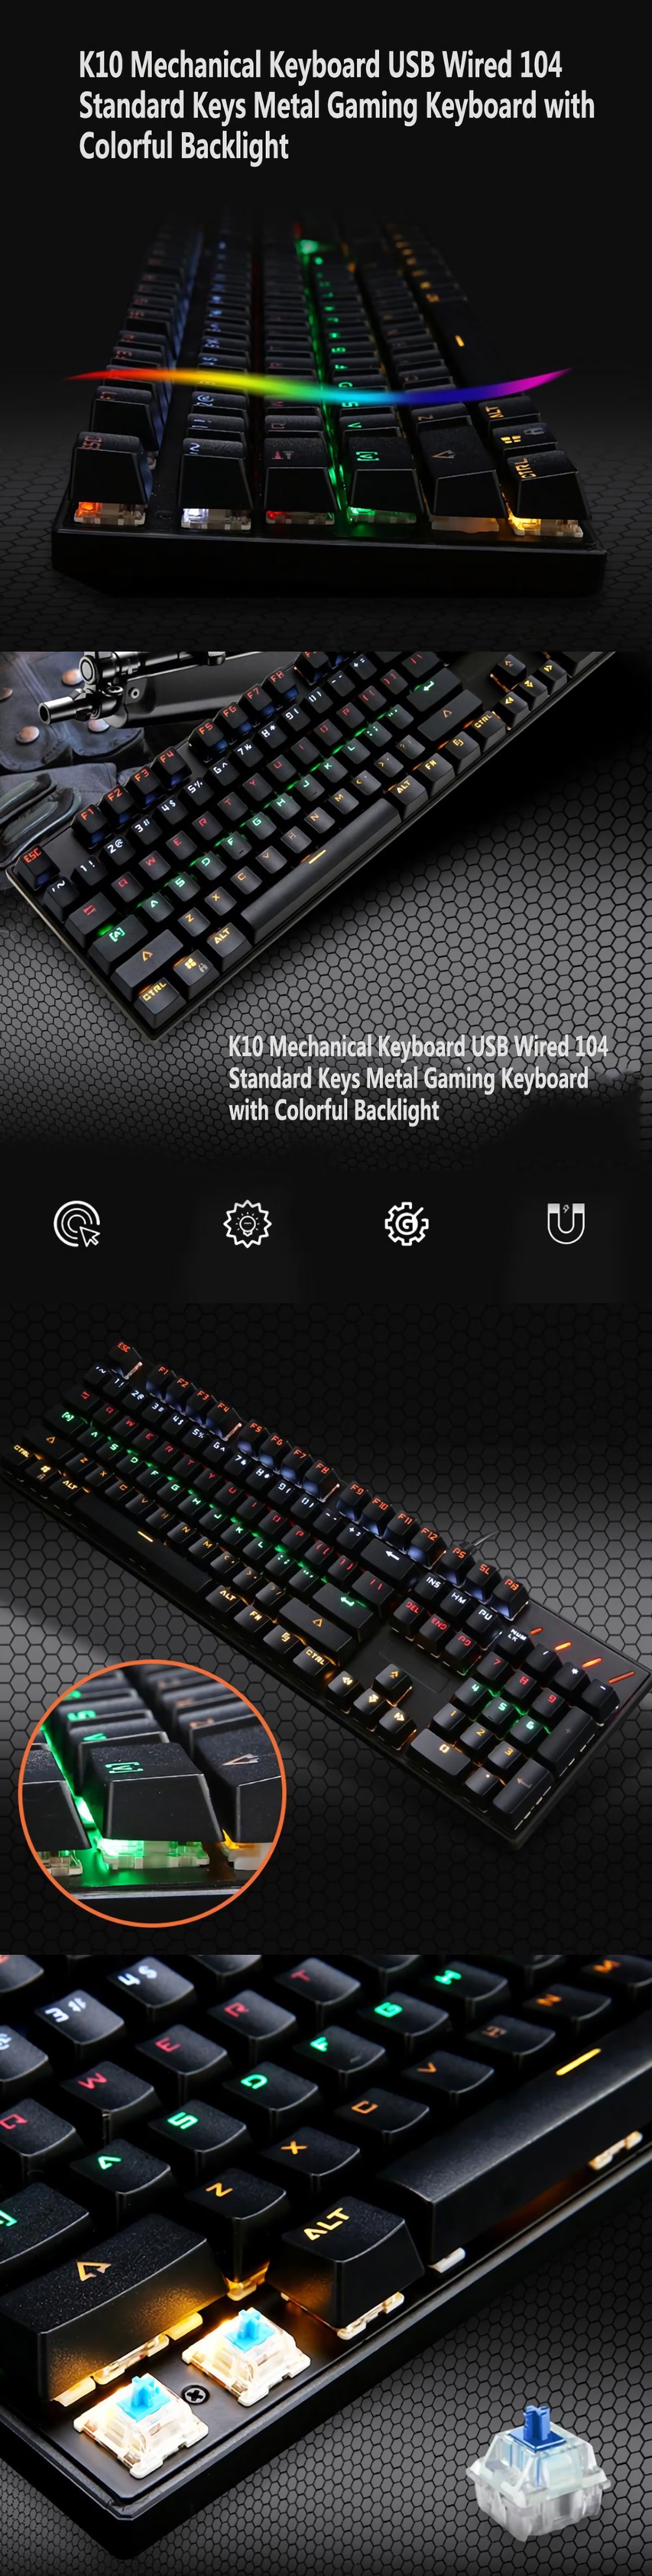 GAMDIAS-K10-Mechanical-RGB-Gaming-Keyboard-104-Keys-USB-Wired-Keyboard-for-Computer-PC-Tablet-Phones-1662753